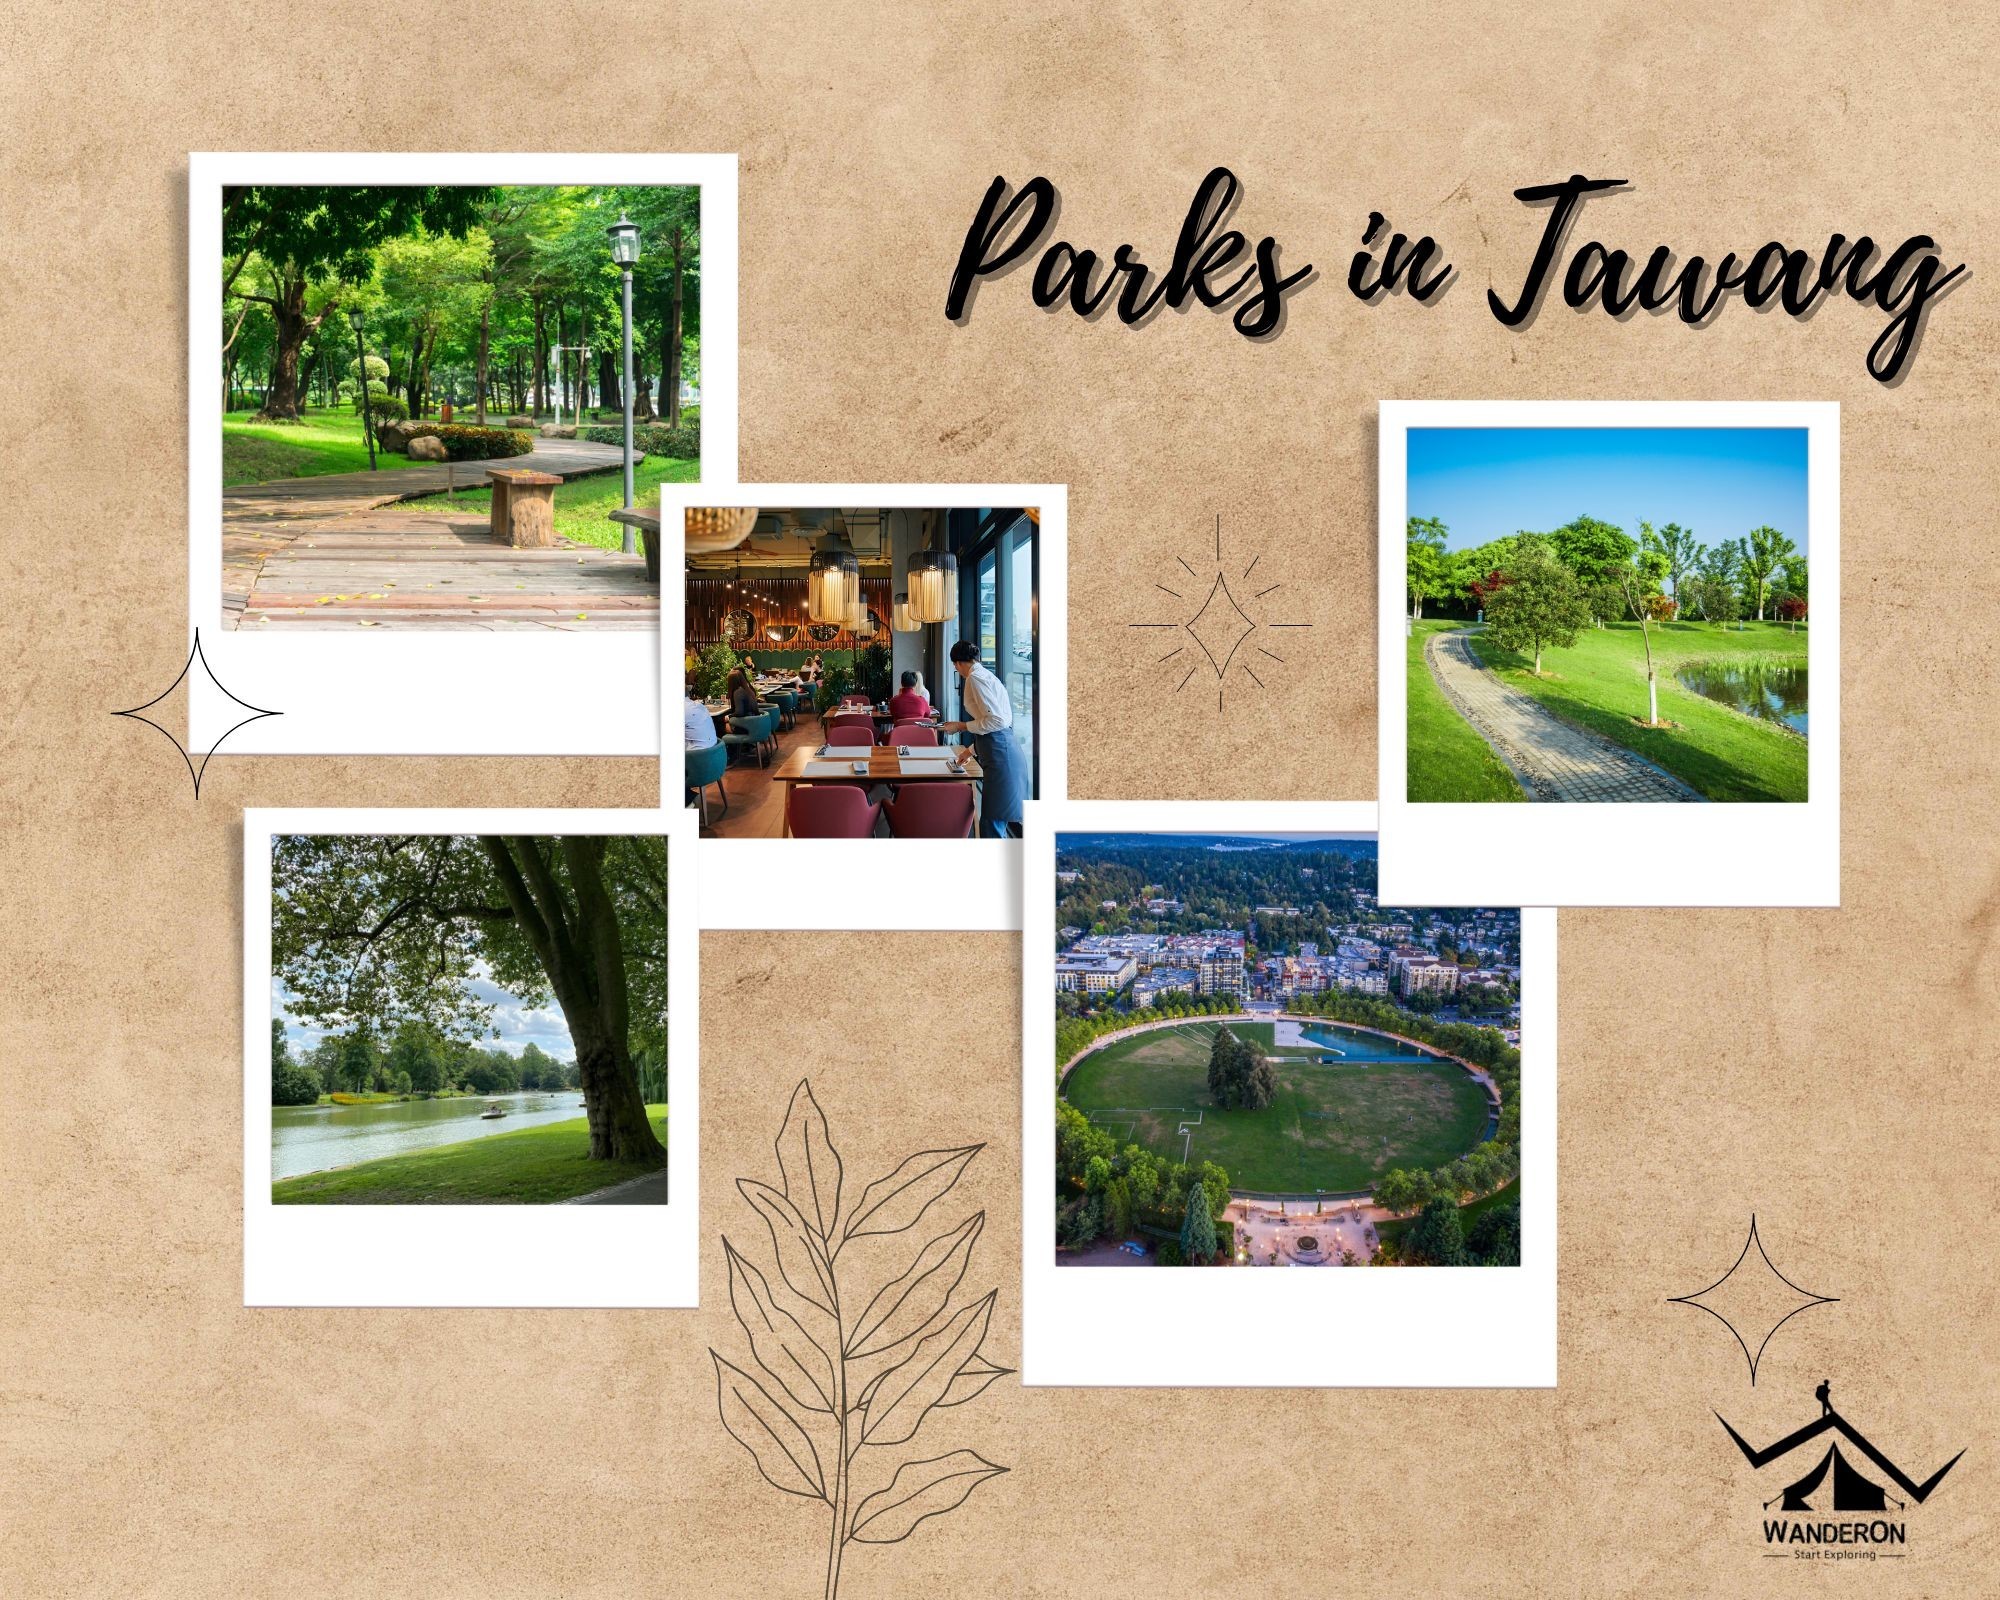  Explore the Natural Beauty of Tawang: Parks and Gardens